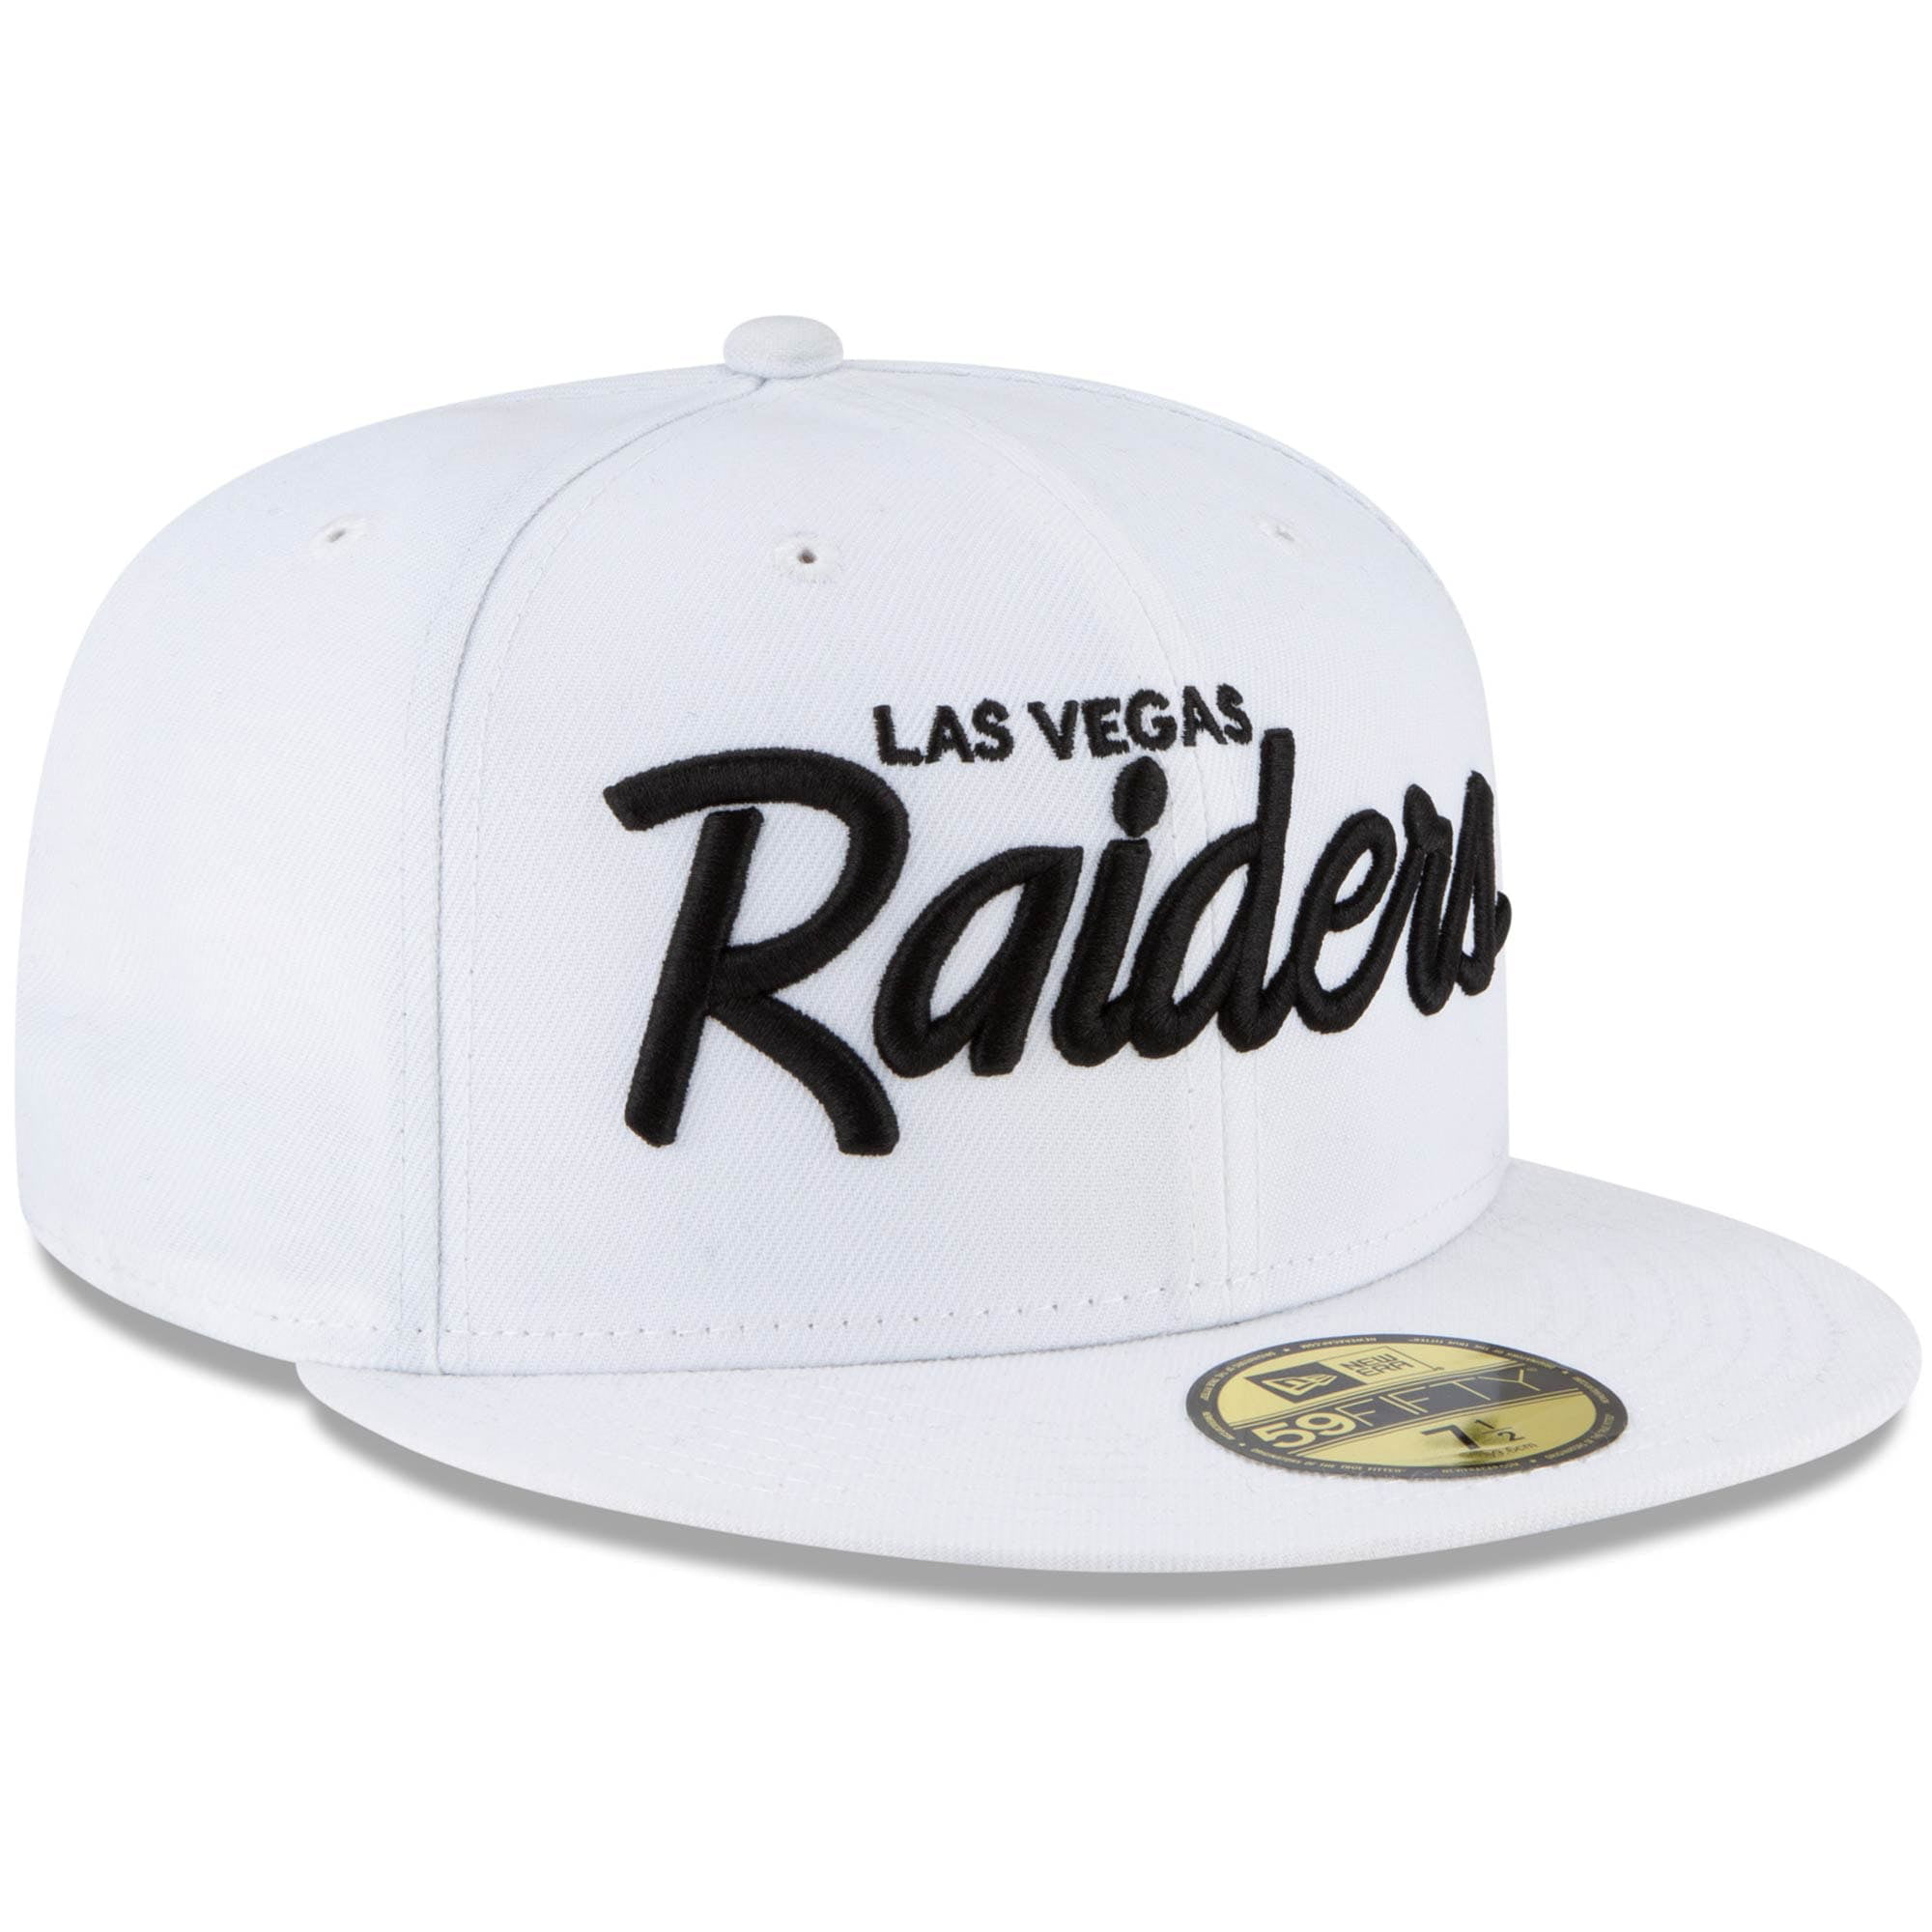 New Era Las Vegas Raiders Mens Short Sleeve Shirt White 60416988